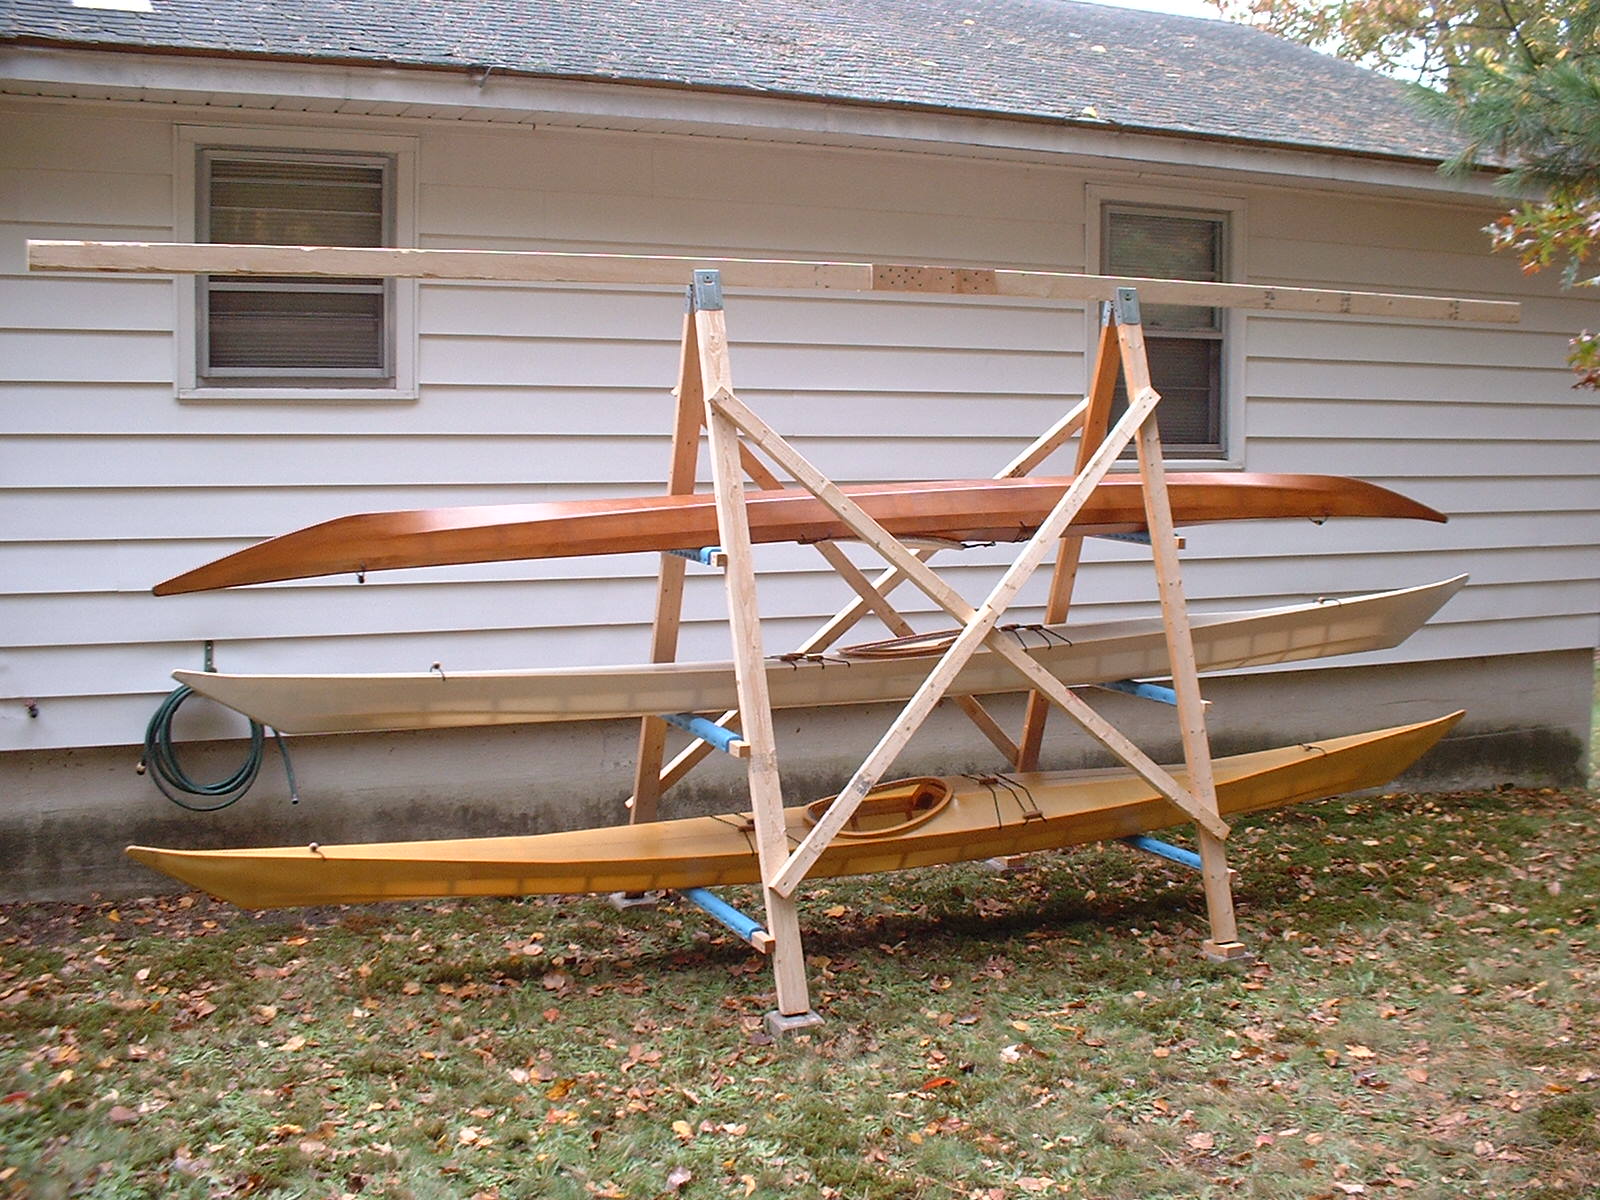 Backyard Diy Canoe Rack Summer Project Canoe Kayak Rack The Free Standing Design Allows You